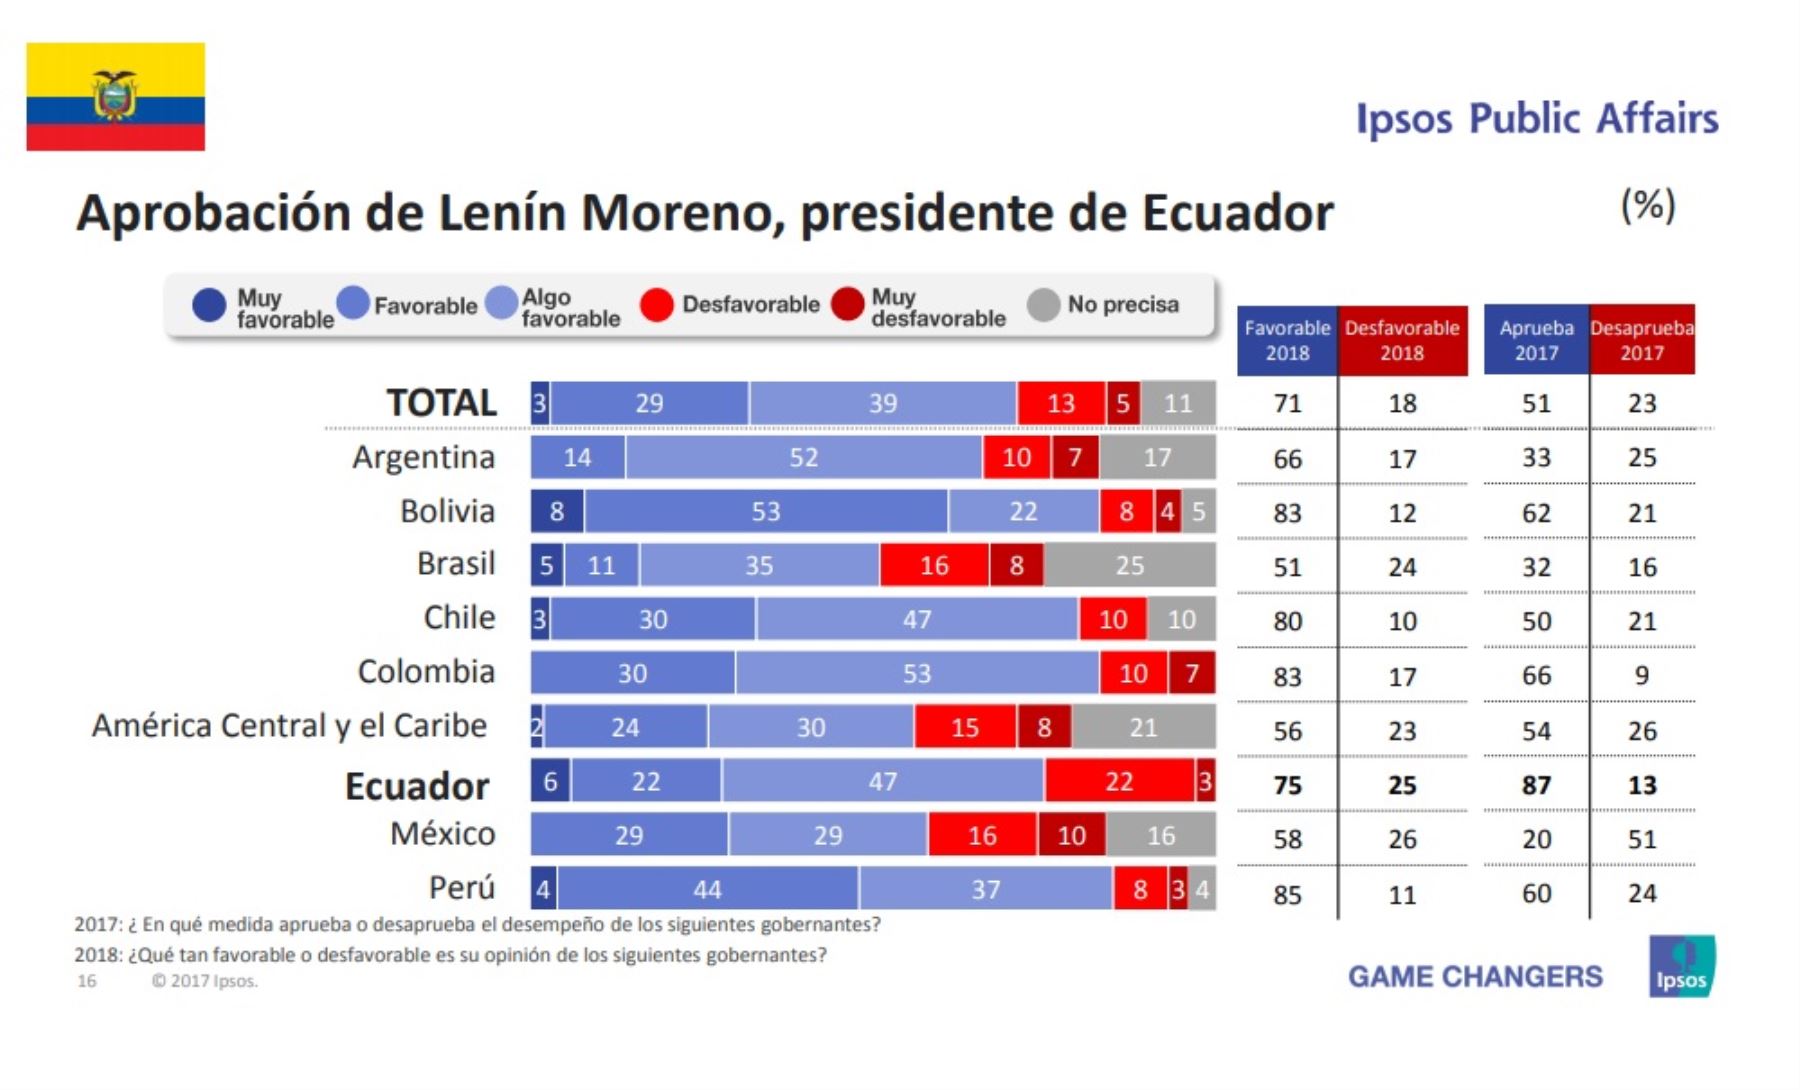 Aprobación del presidente de Ecuador, Lenín Moreno. Encuesta Ipsos Public Affairs 2018.